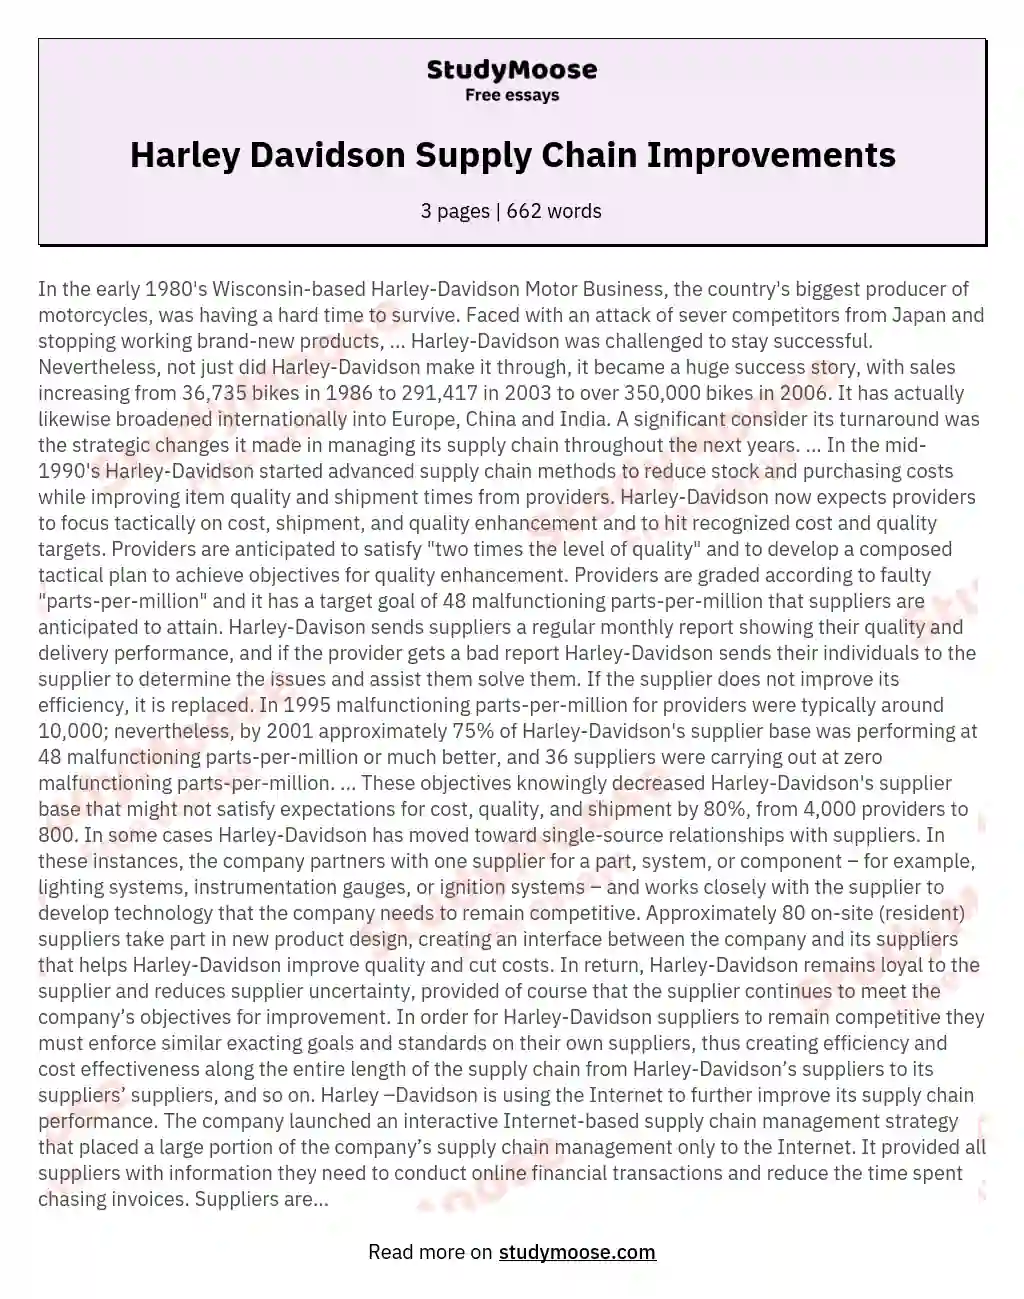 Harley Davidson Supply Chain Improvements essay